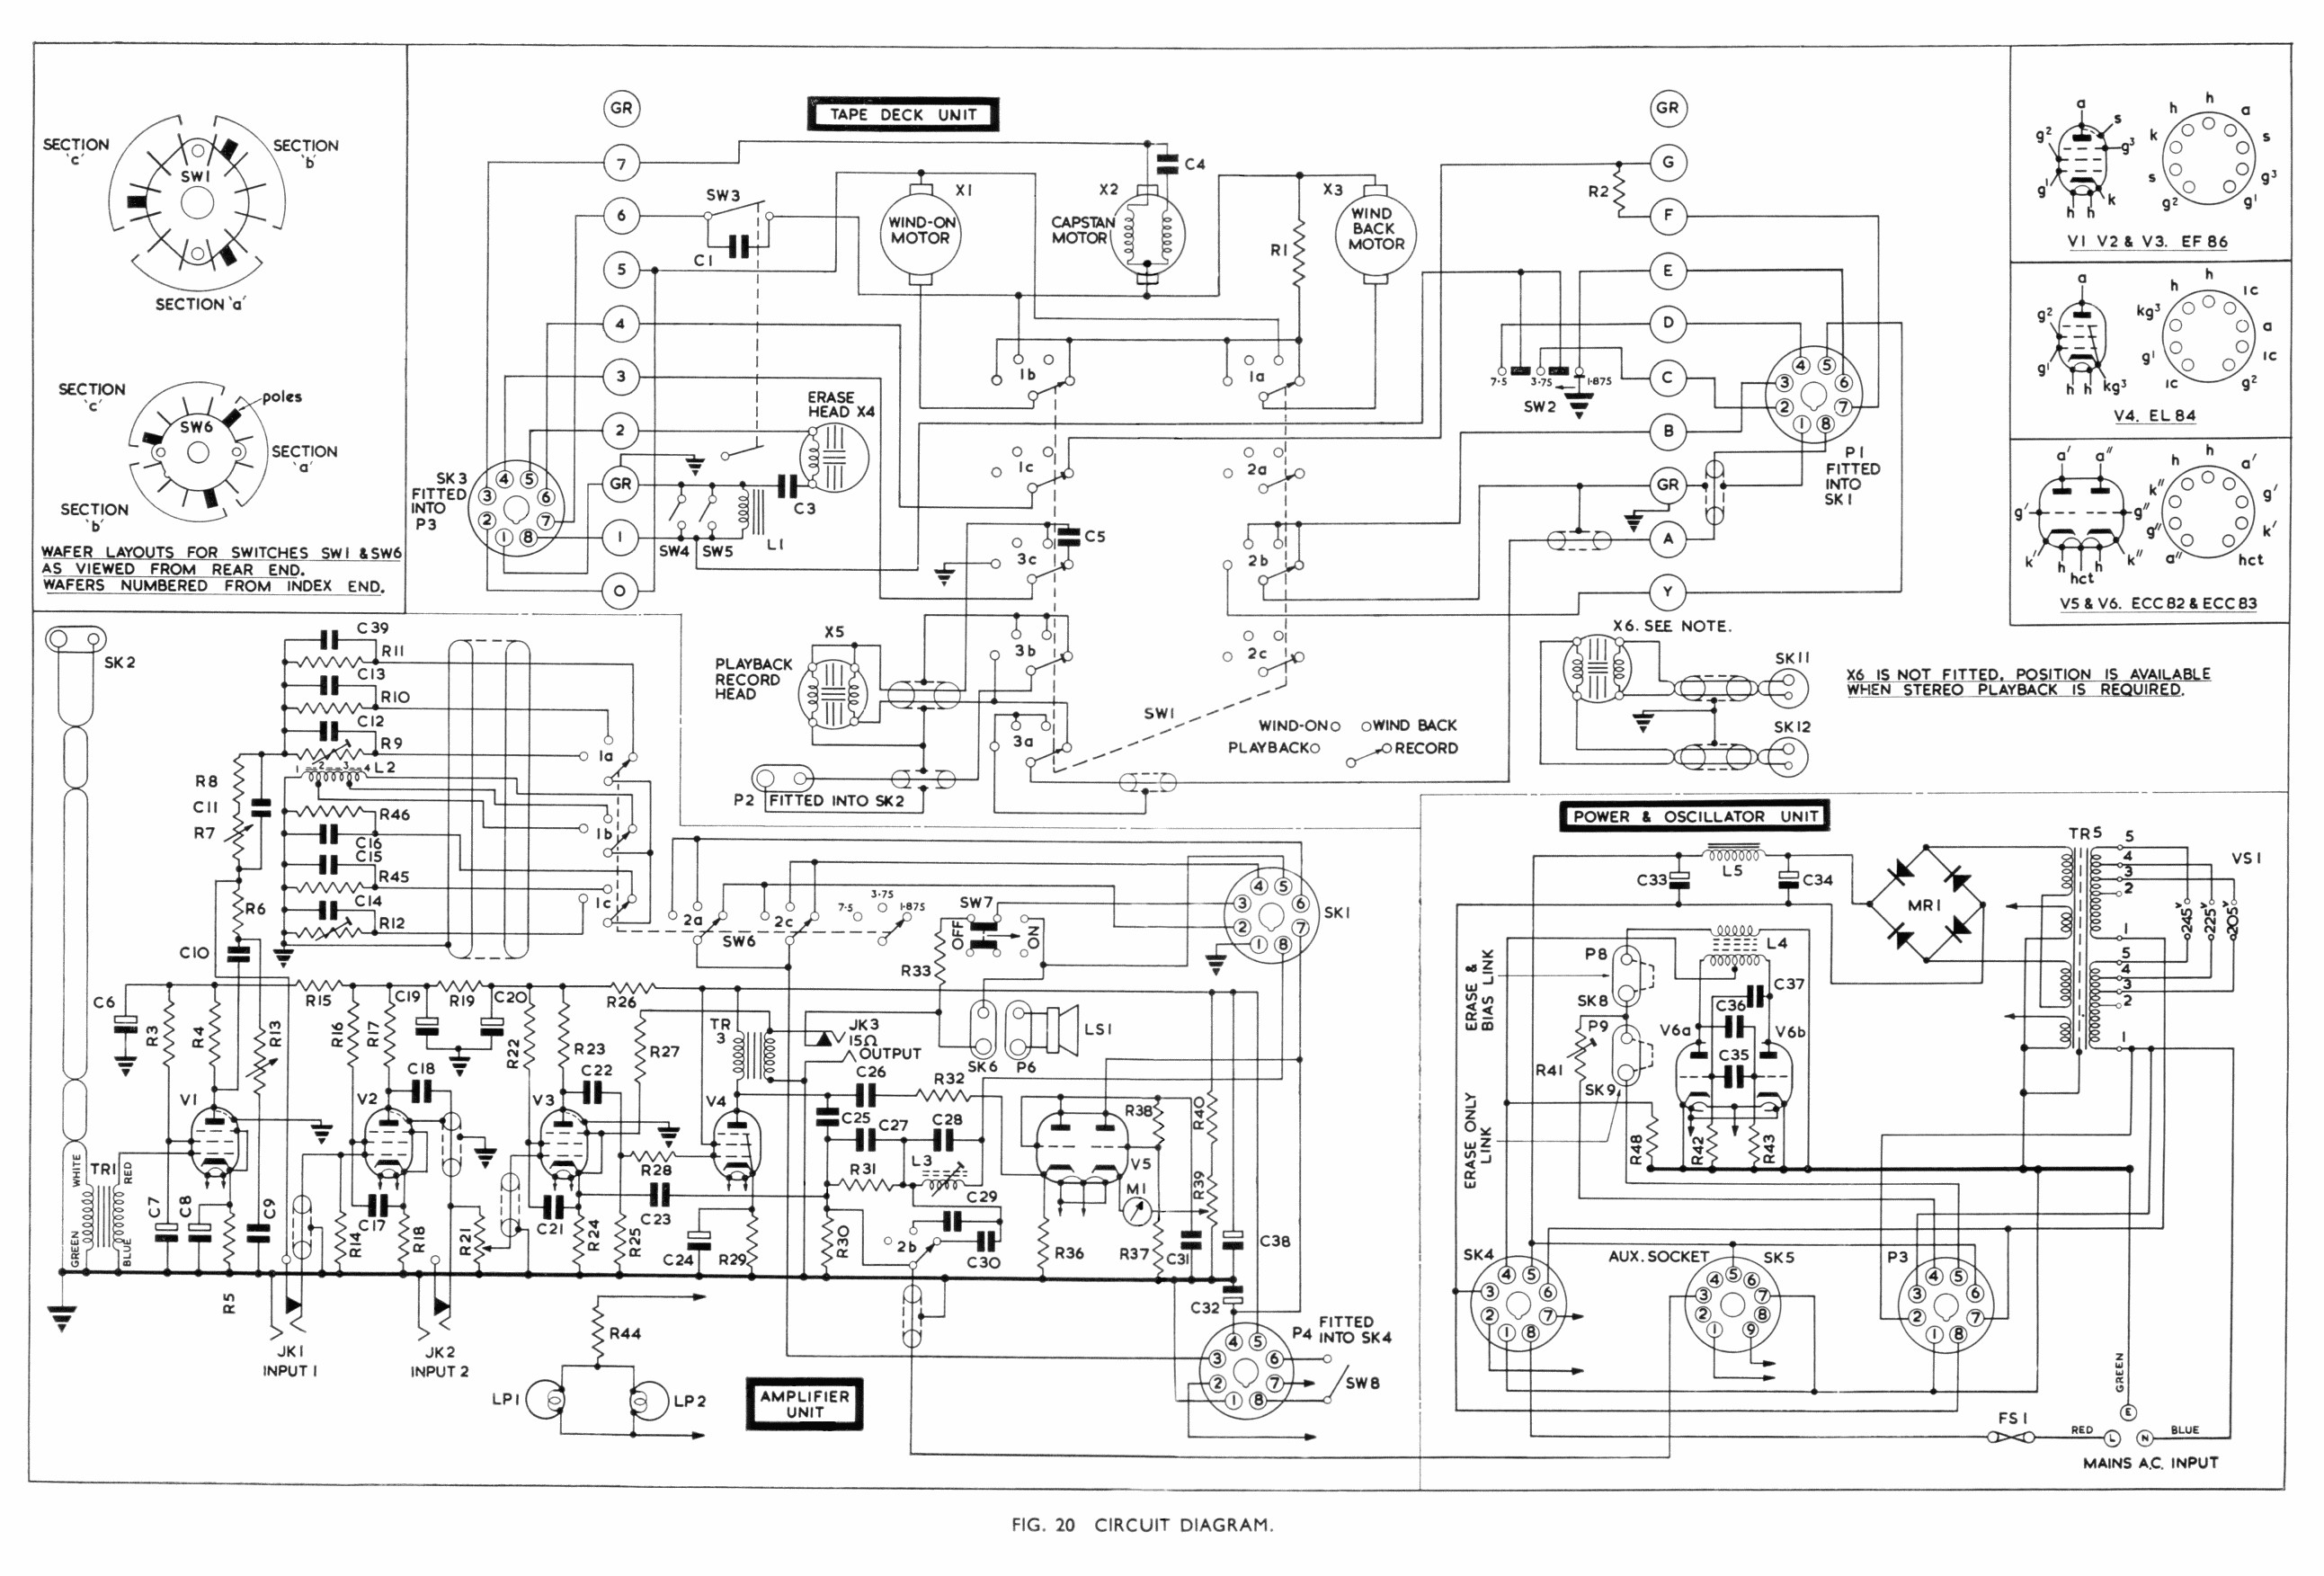 Wiring Diagram for Refrigerator Gate Circuit Diagram Free Download Wiring Diagram Schematic Wiring Of Wiring Diagram for Refrigerator